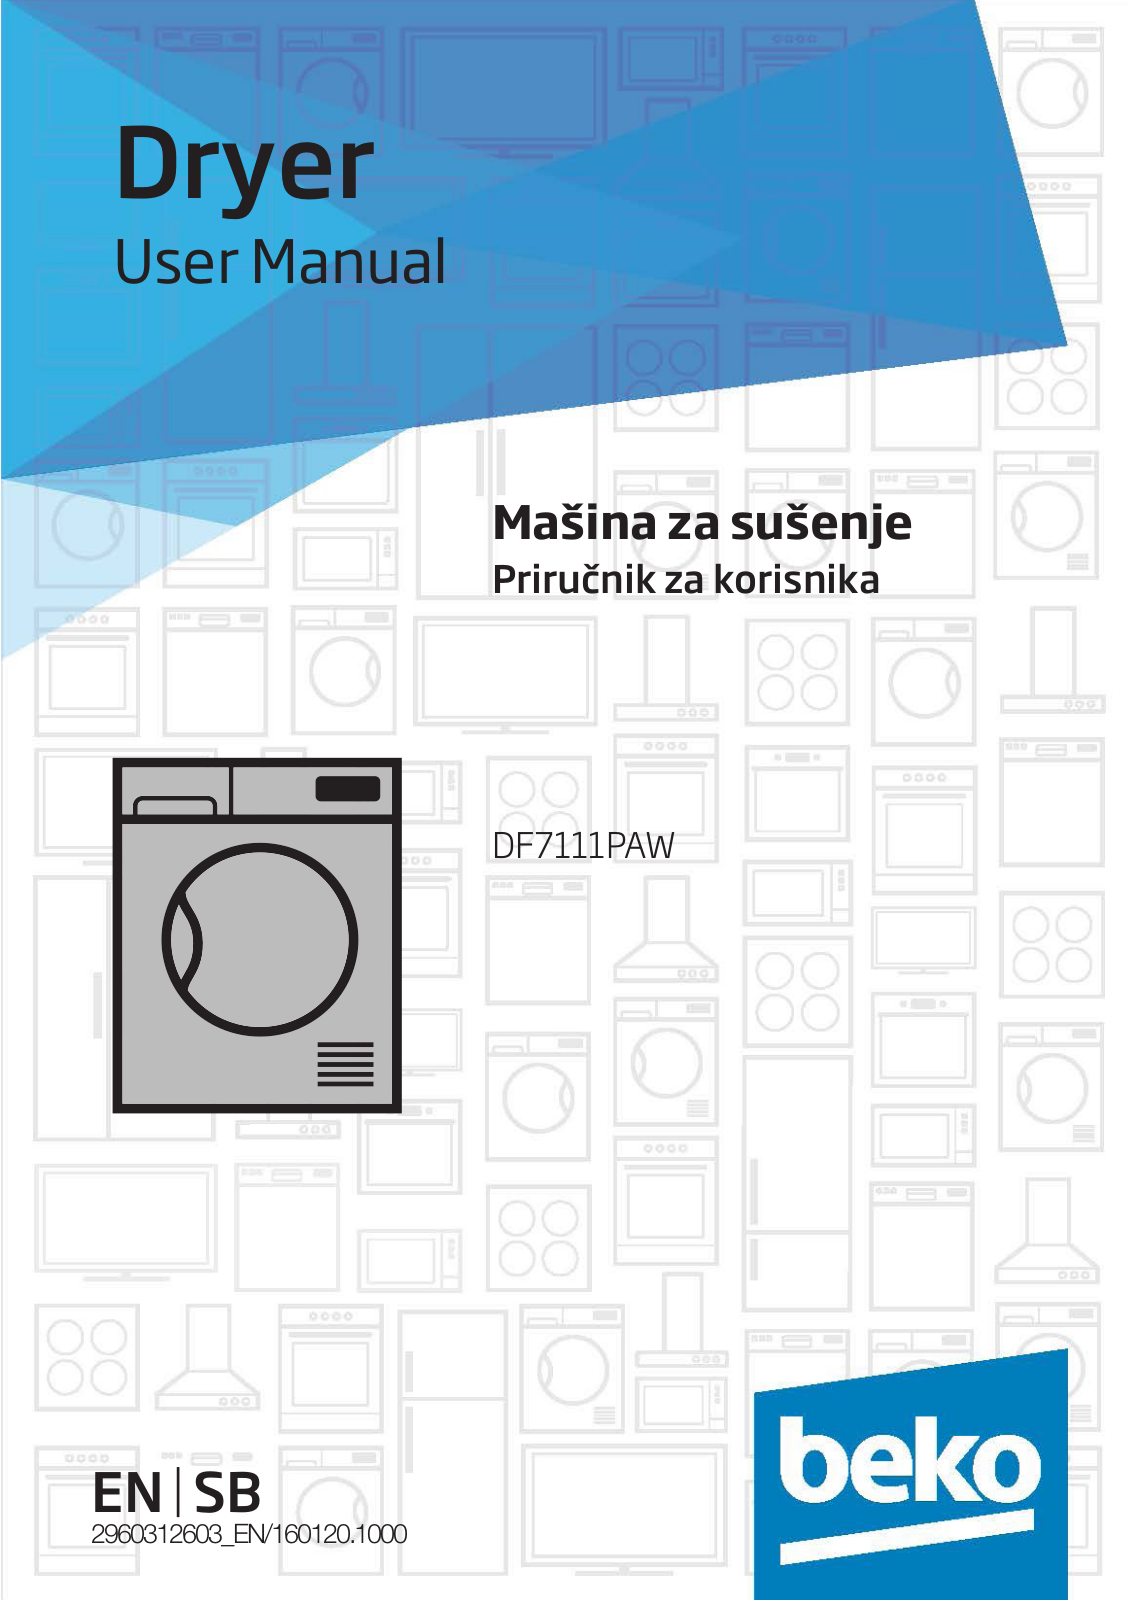 Beko DF 7111 PAW User Manual